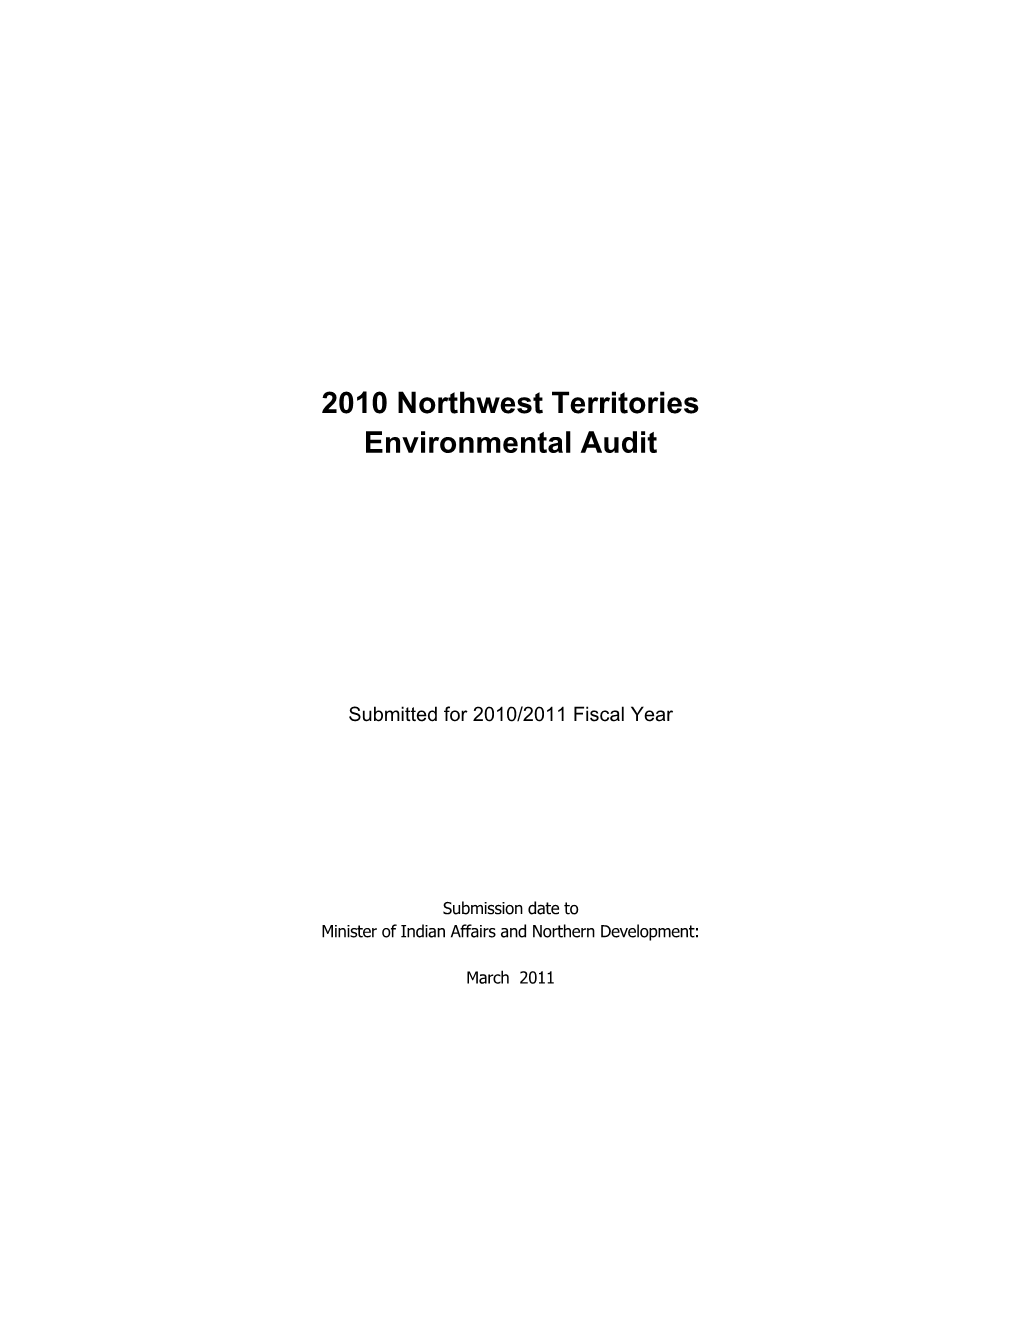 2010 Northwest Territories Environmental Audit